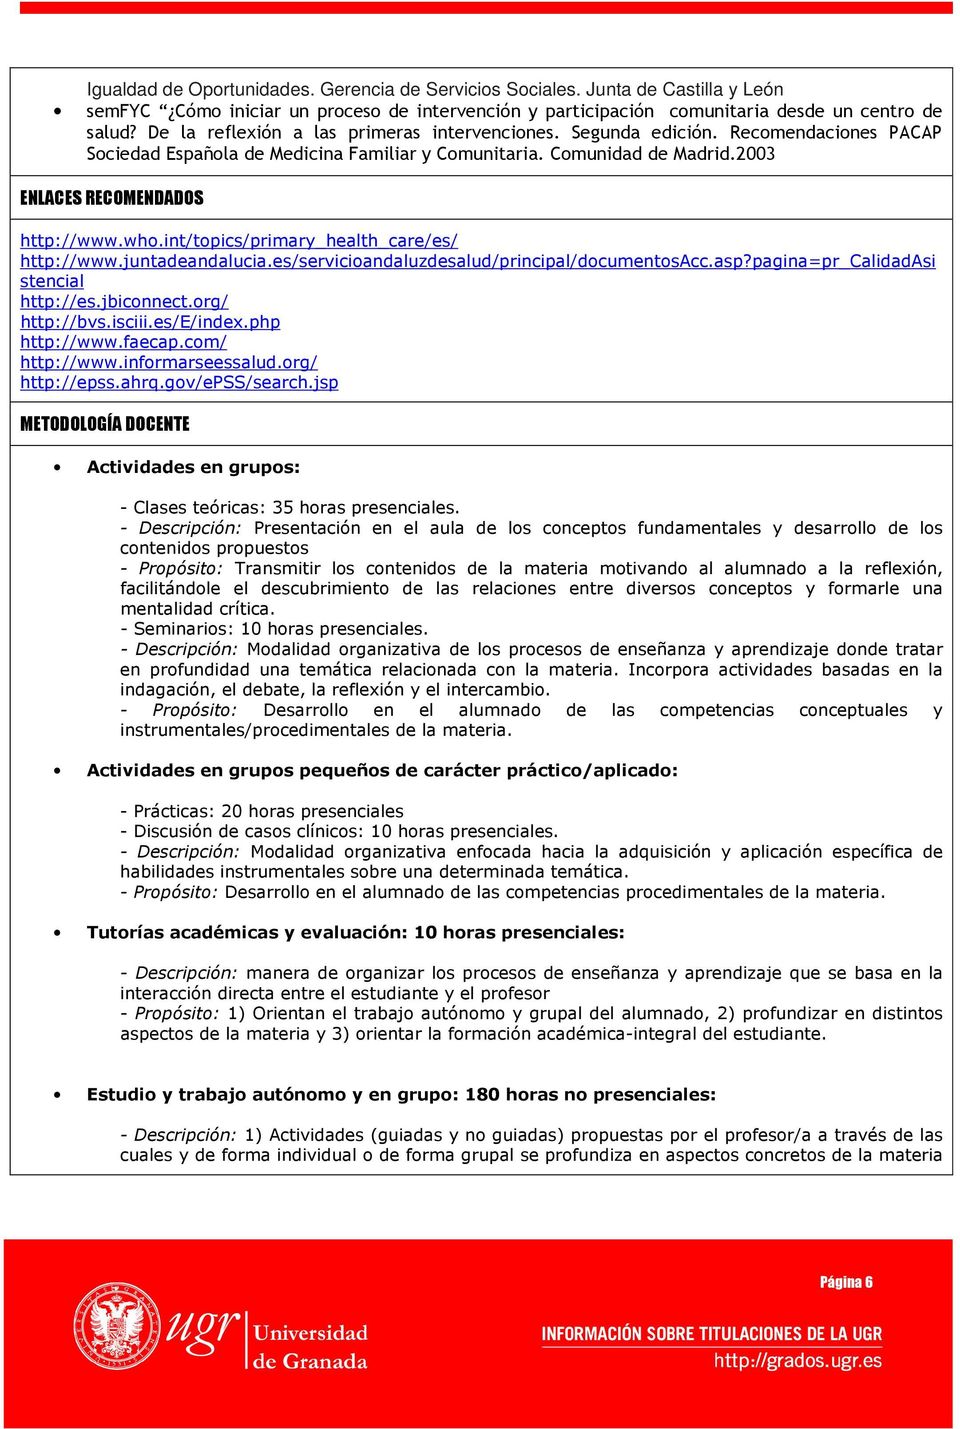 who.int/topics/primary_health_care/es/ http://www.juntadeandalucia.es/servicioandaluzdesalud/principal/documentosacc.asp?pagina=pr_calidadasi stencial http://es.jbiconnect.org/ http://bvs.isciii.